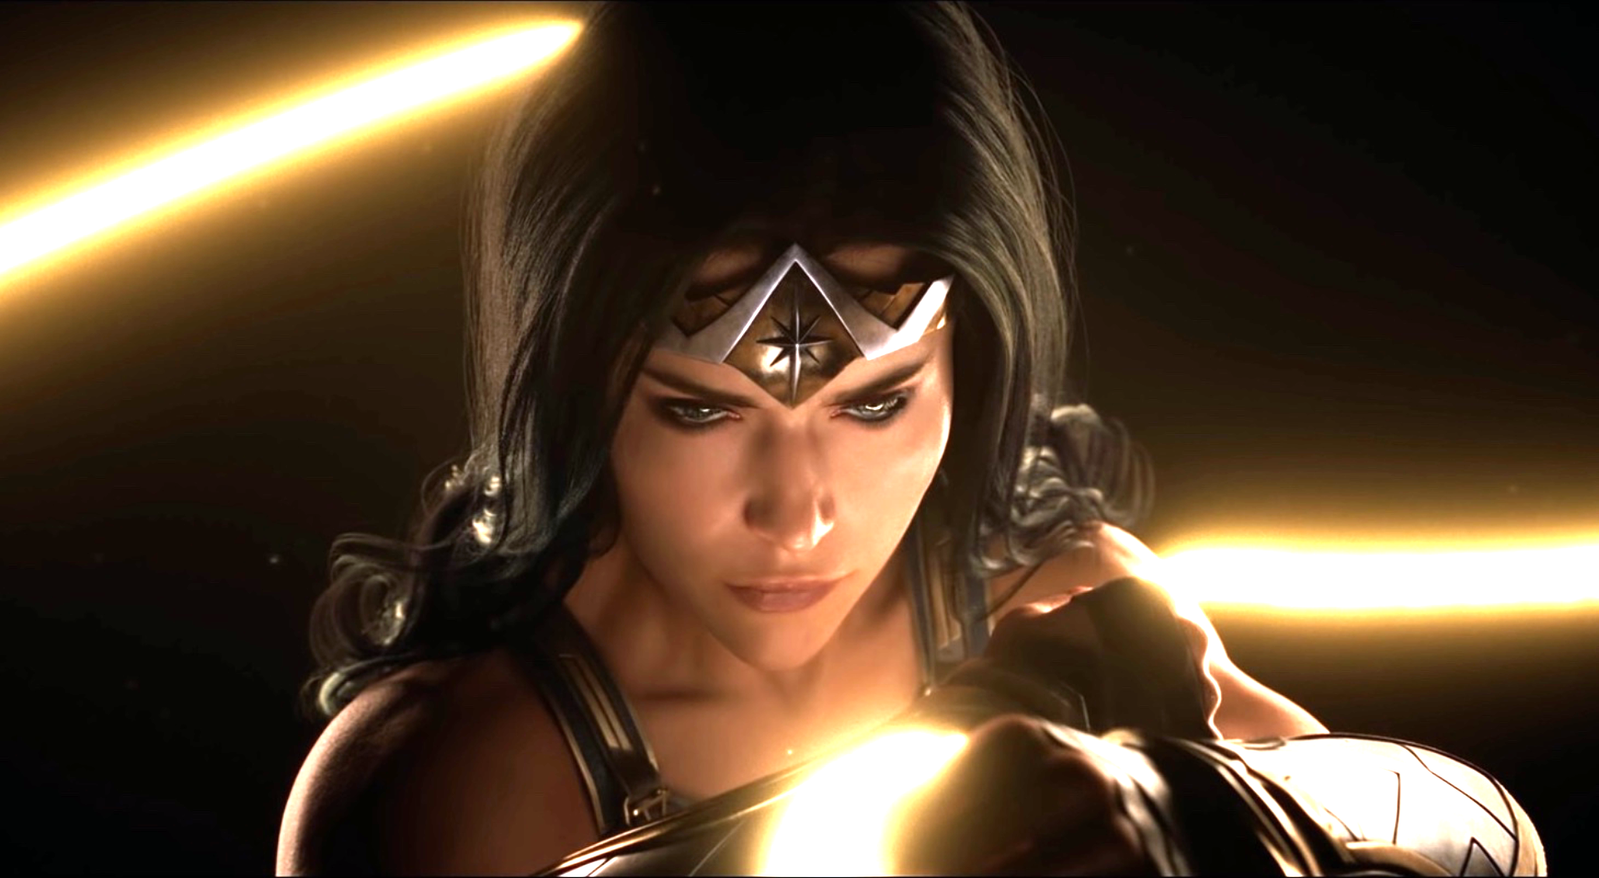 monolith wonder woman game adds star god of war developer